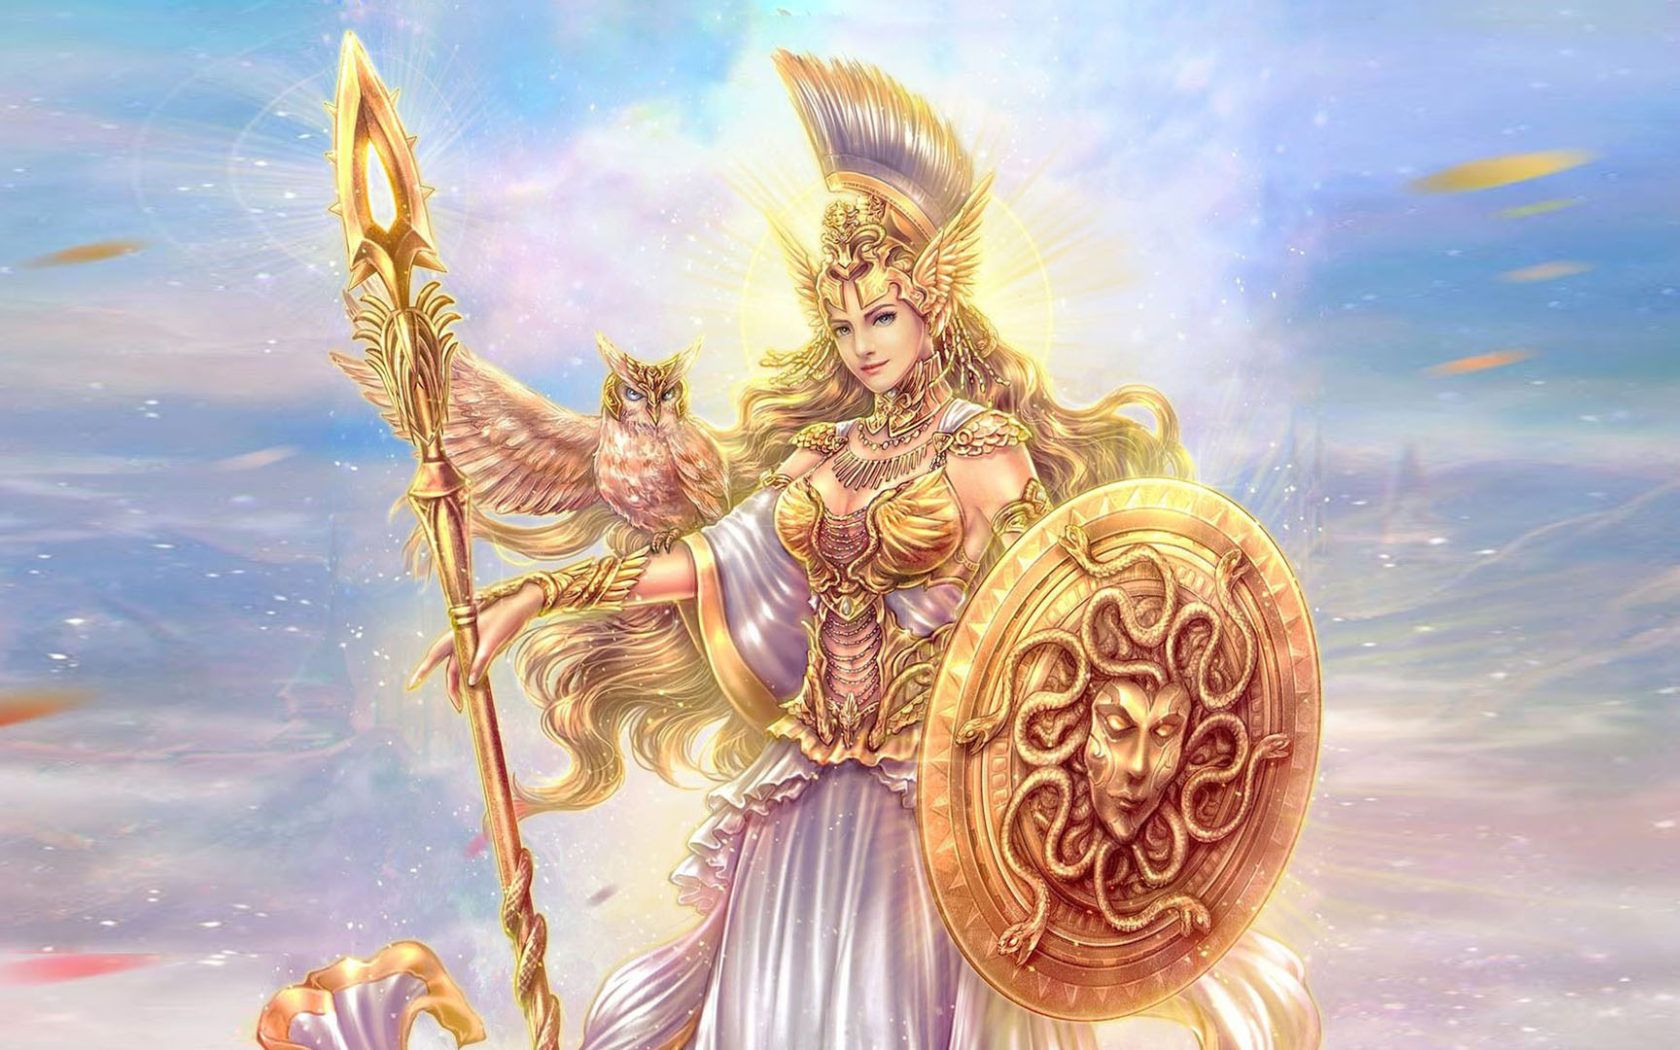 Athena the Goddess of War fantasy art Desktop HD Wallpapers For PC Tablet A...